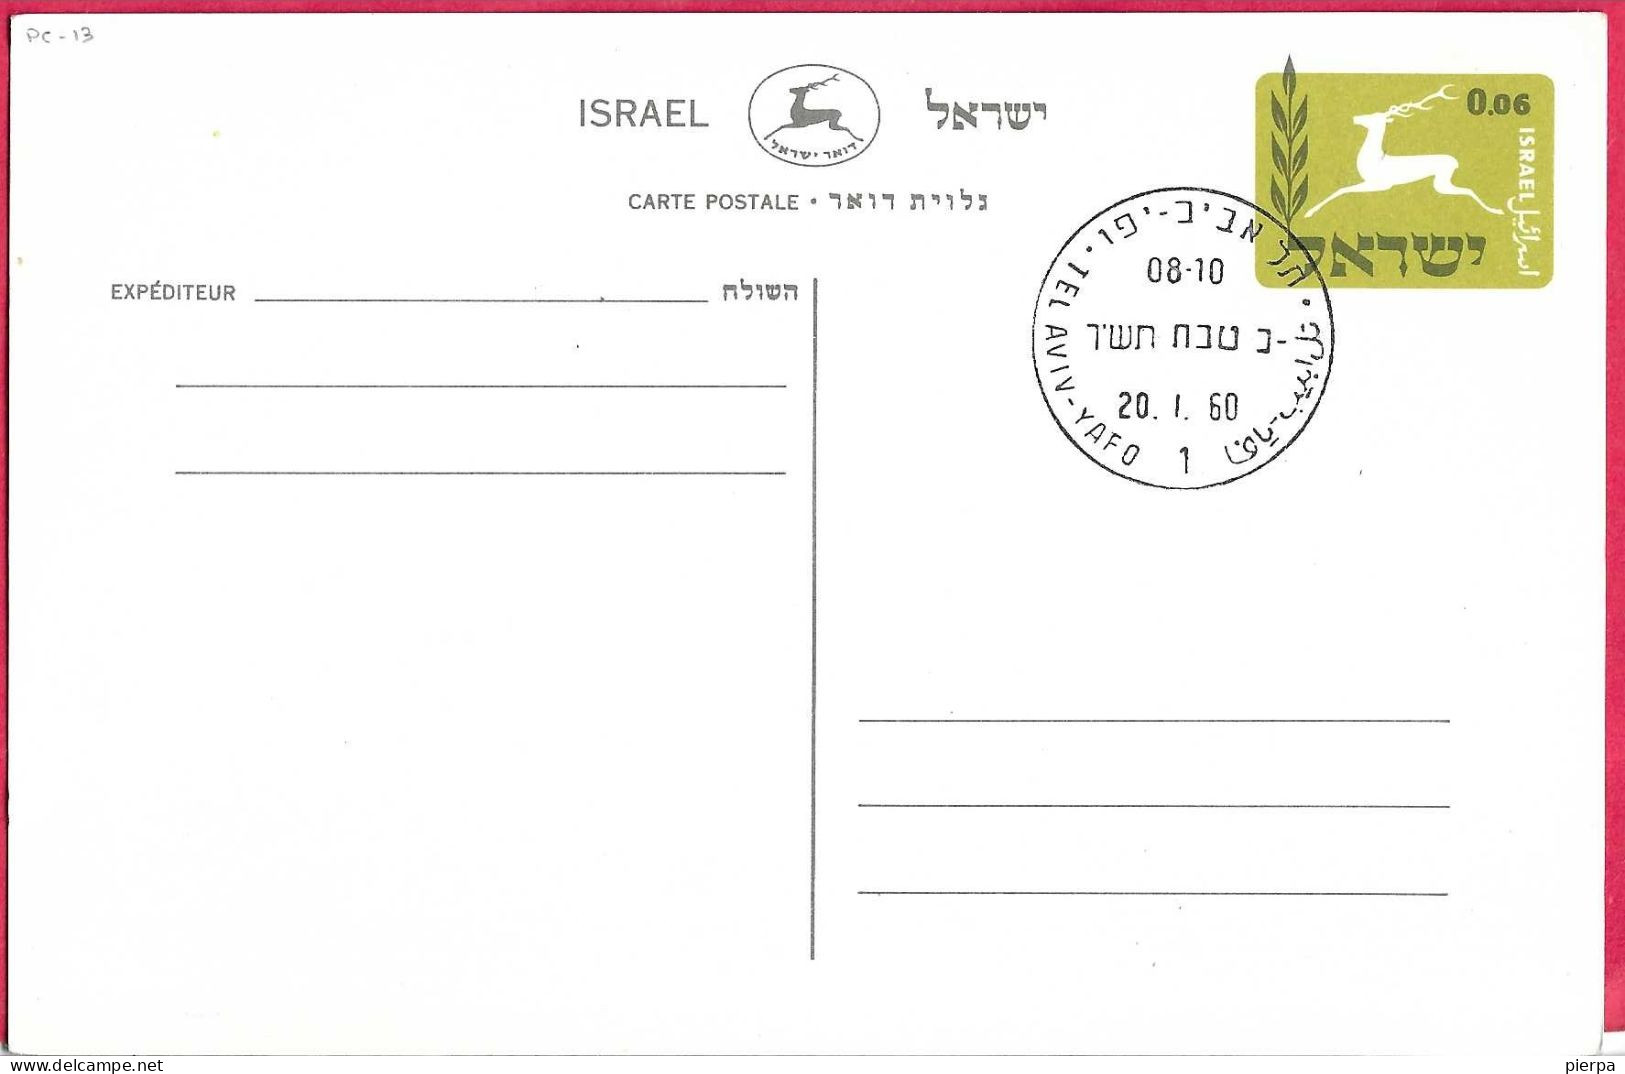 ISRAELE - INTERO CARTOLINA POSTALE 0,06 - ANNULLO "TEL AVIV - YAFO *20.1.60* - Covers & Documents